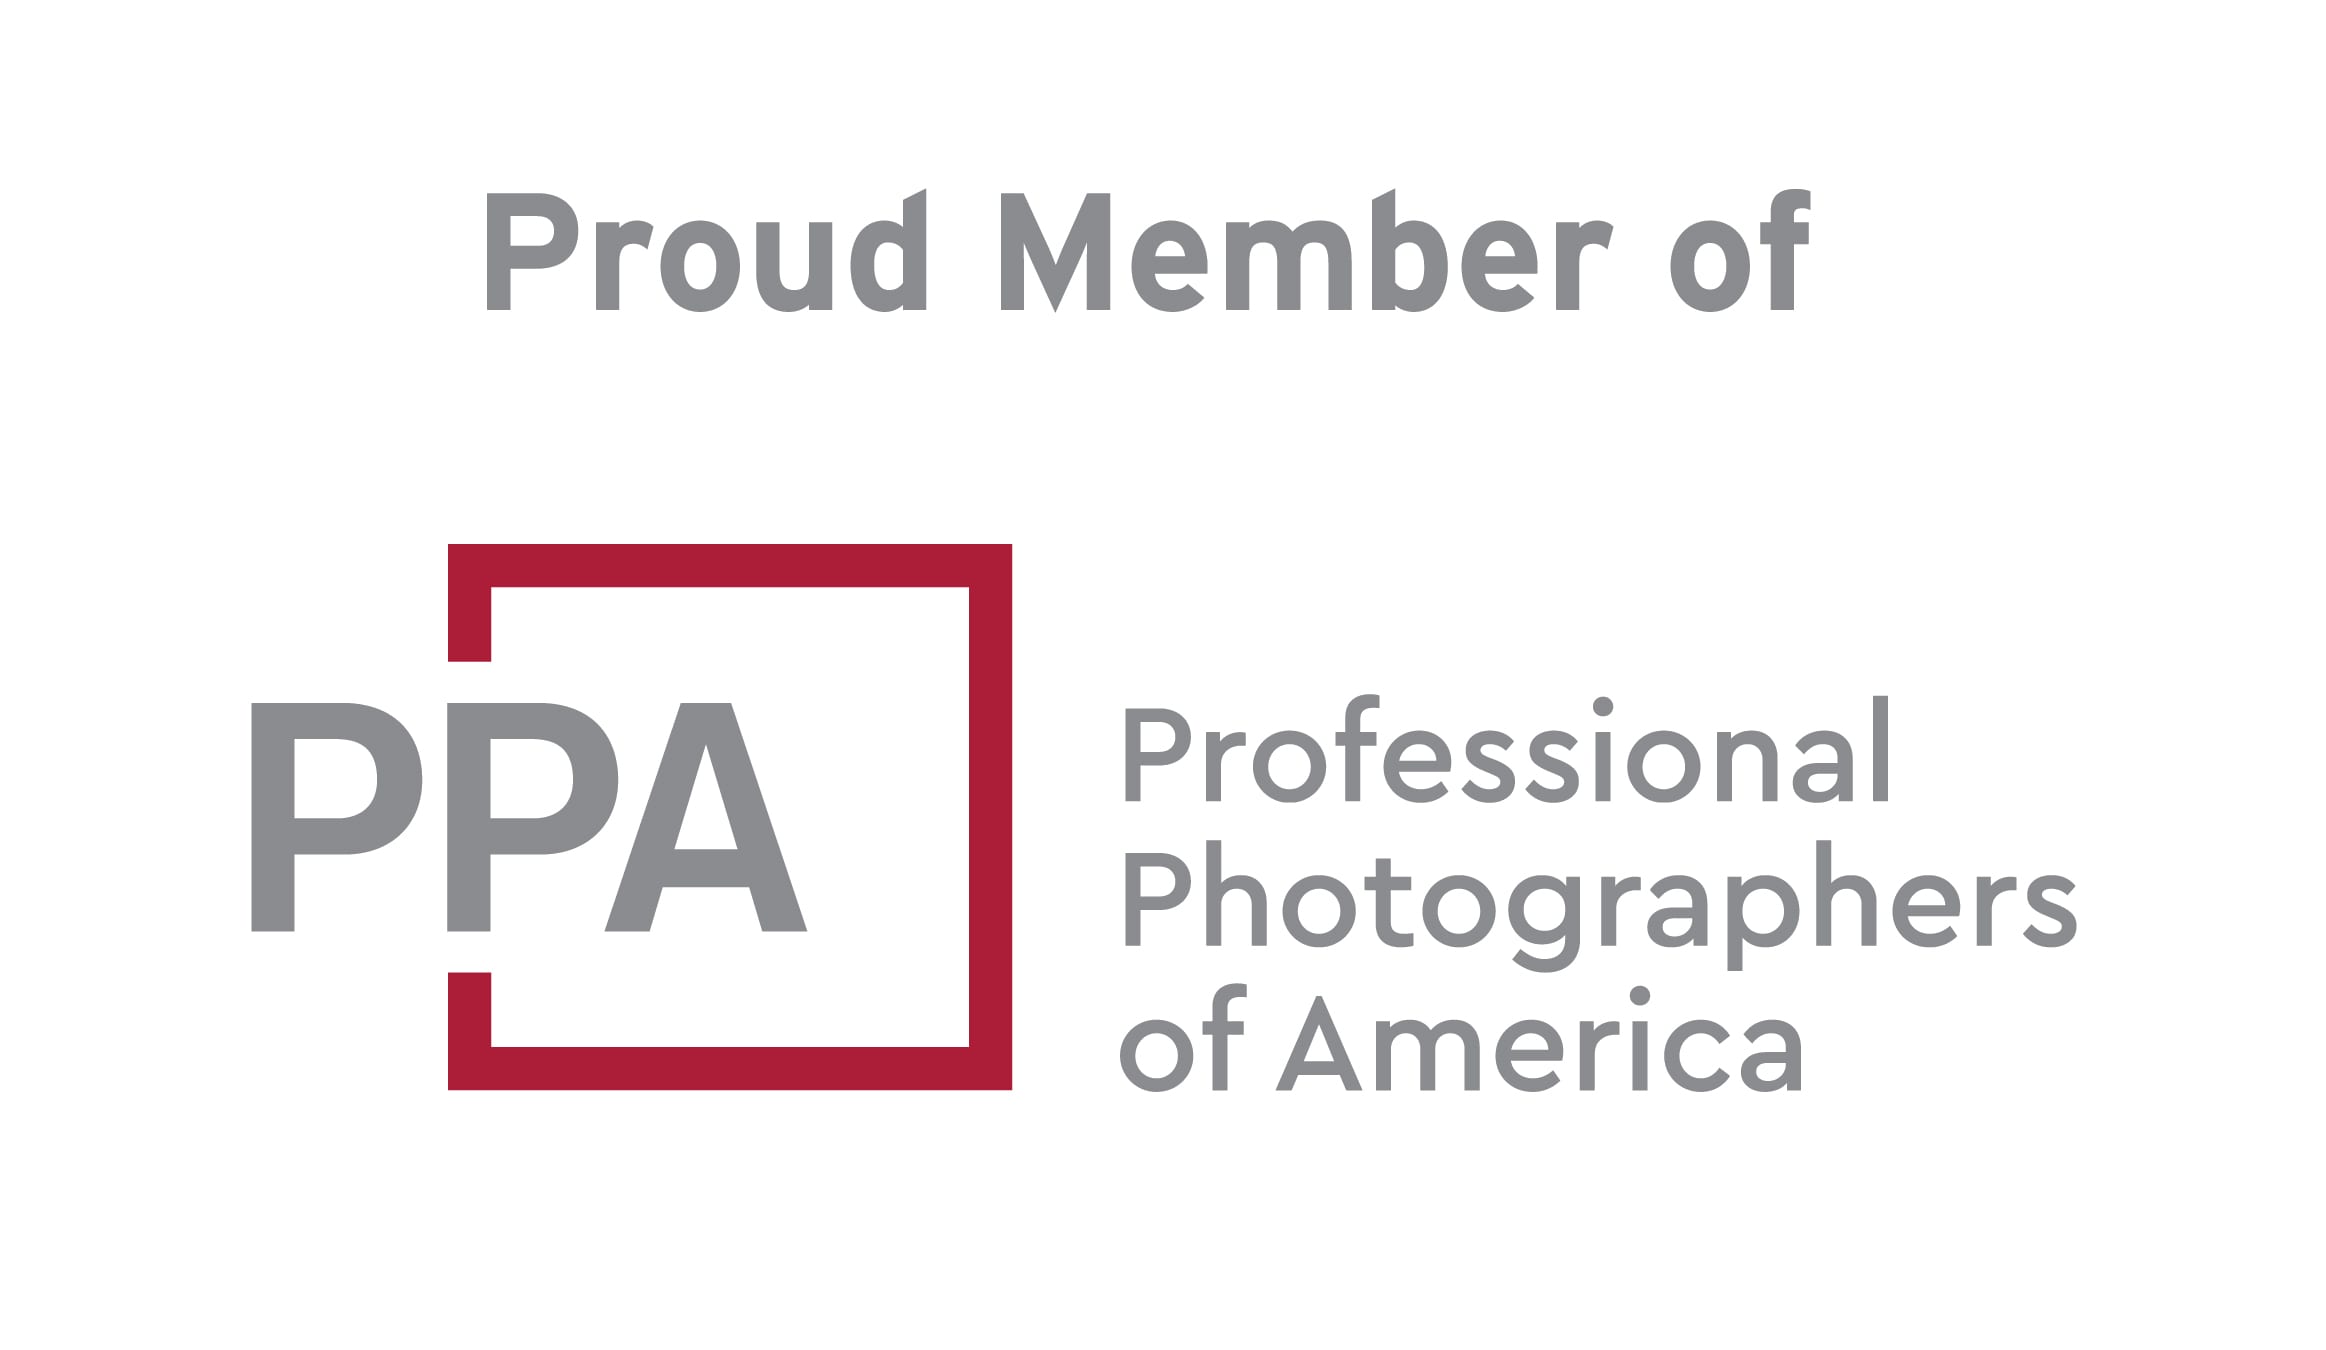 PROFESSIONAL PHOTOGRAPHERS OF AMERICA